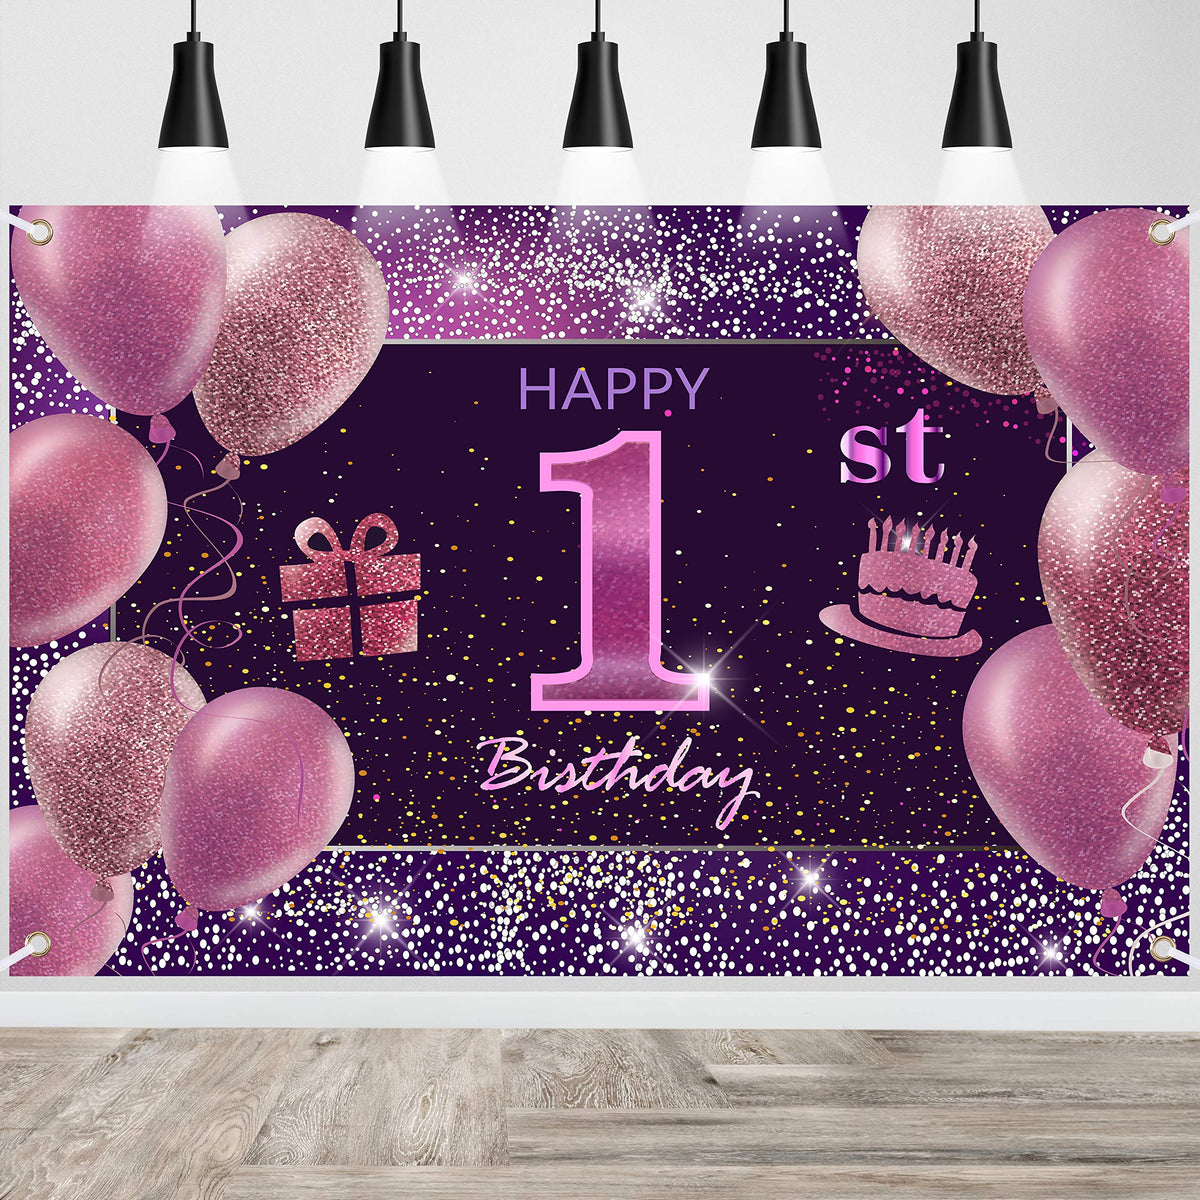 88th Birthday Decorations IMISI Happy Birthday Banner Pink Birthday Backdrop Decorations for a Party